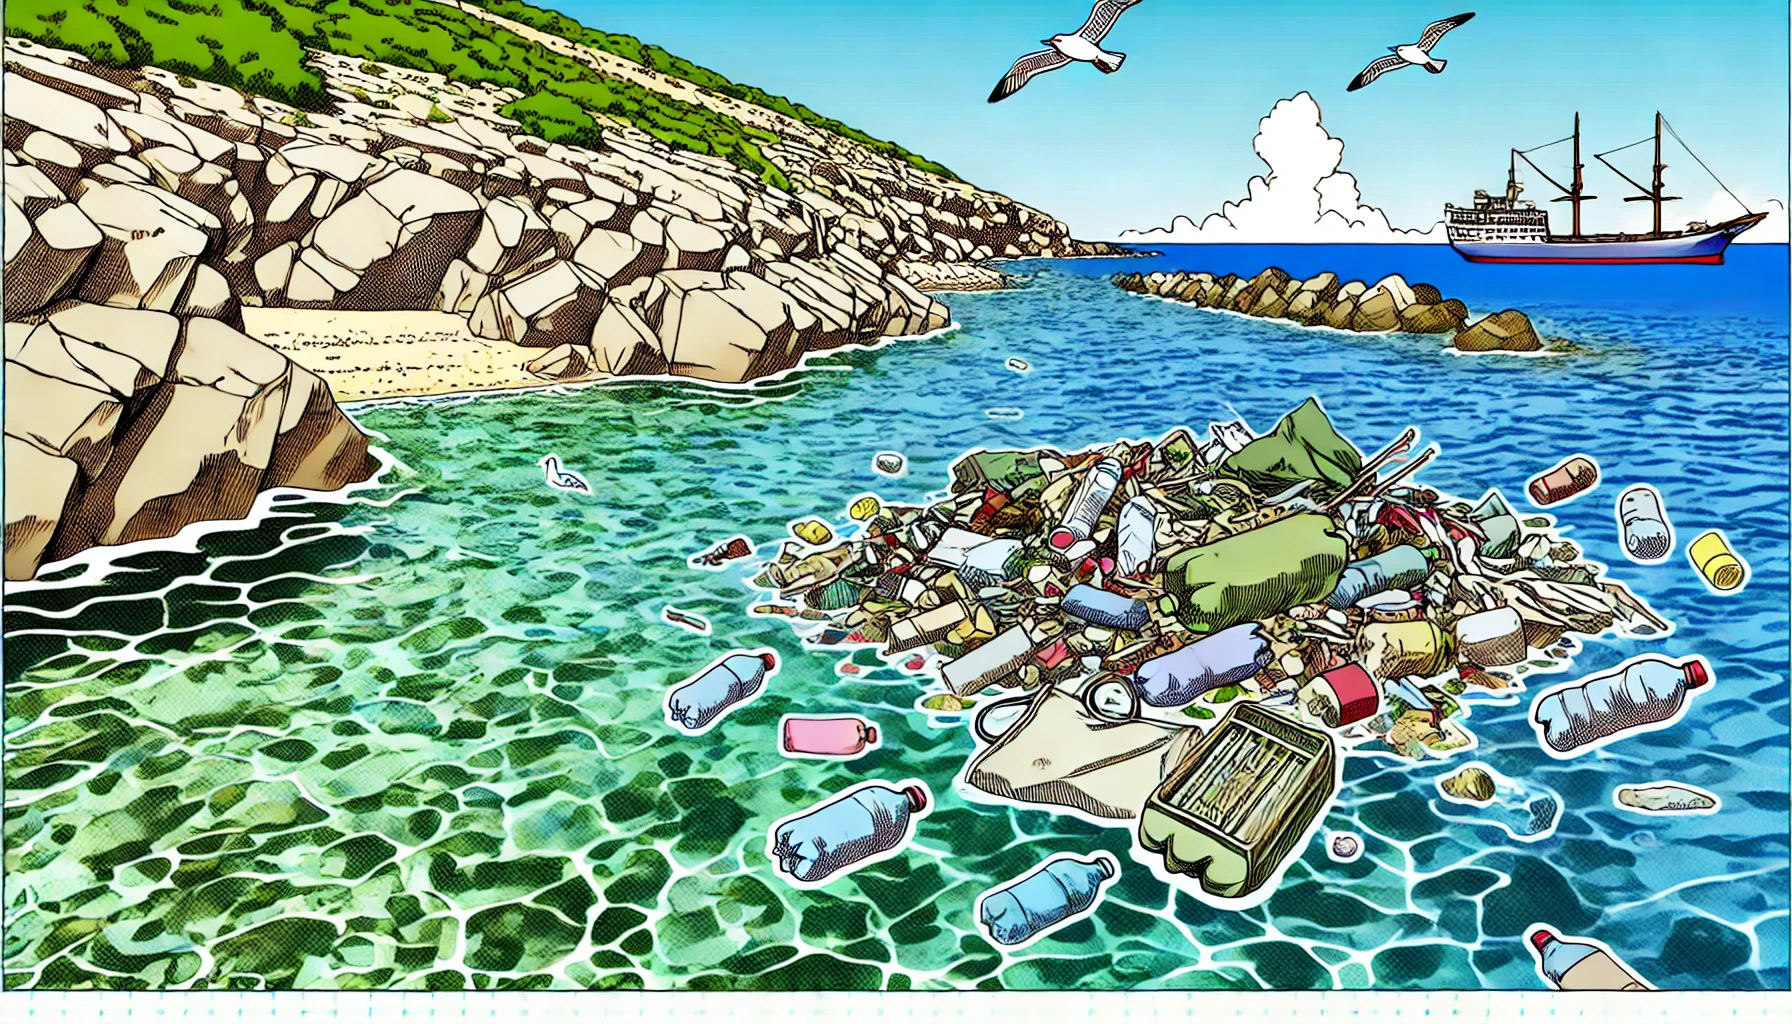 Satellites monitor marine rubbish in the Mediterranean Sea